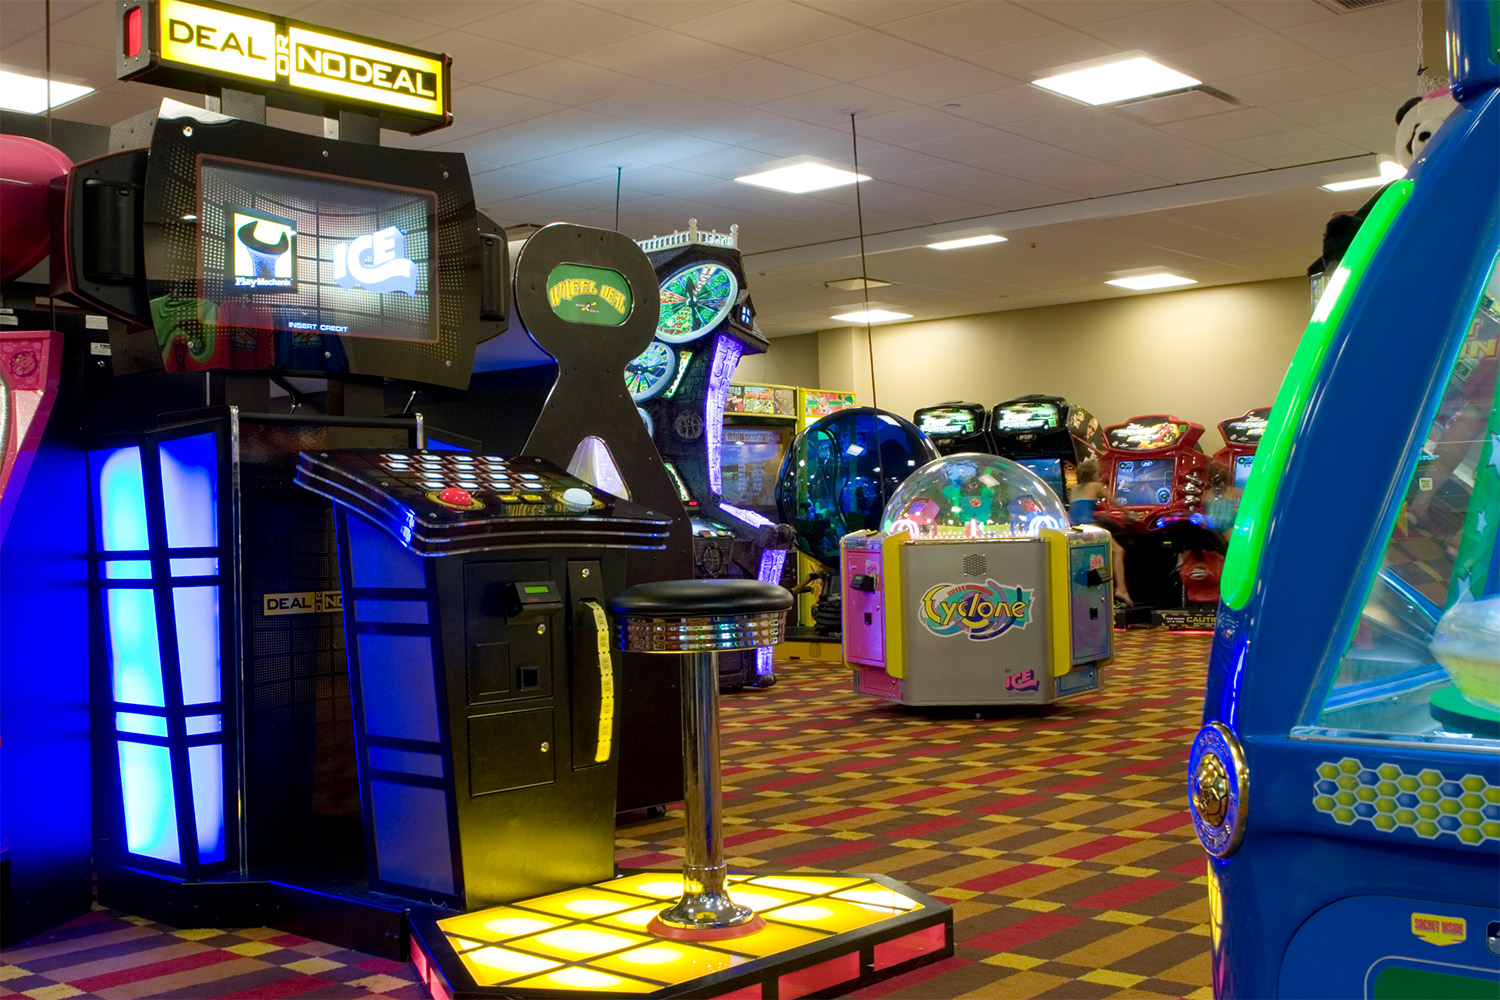 Arcade area with plentiful games, classic public lighting fixtures on ceiling, and carpet flooring 